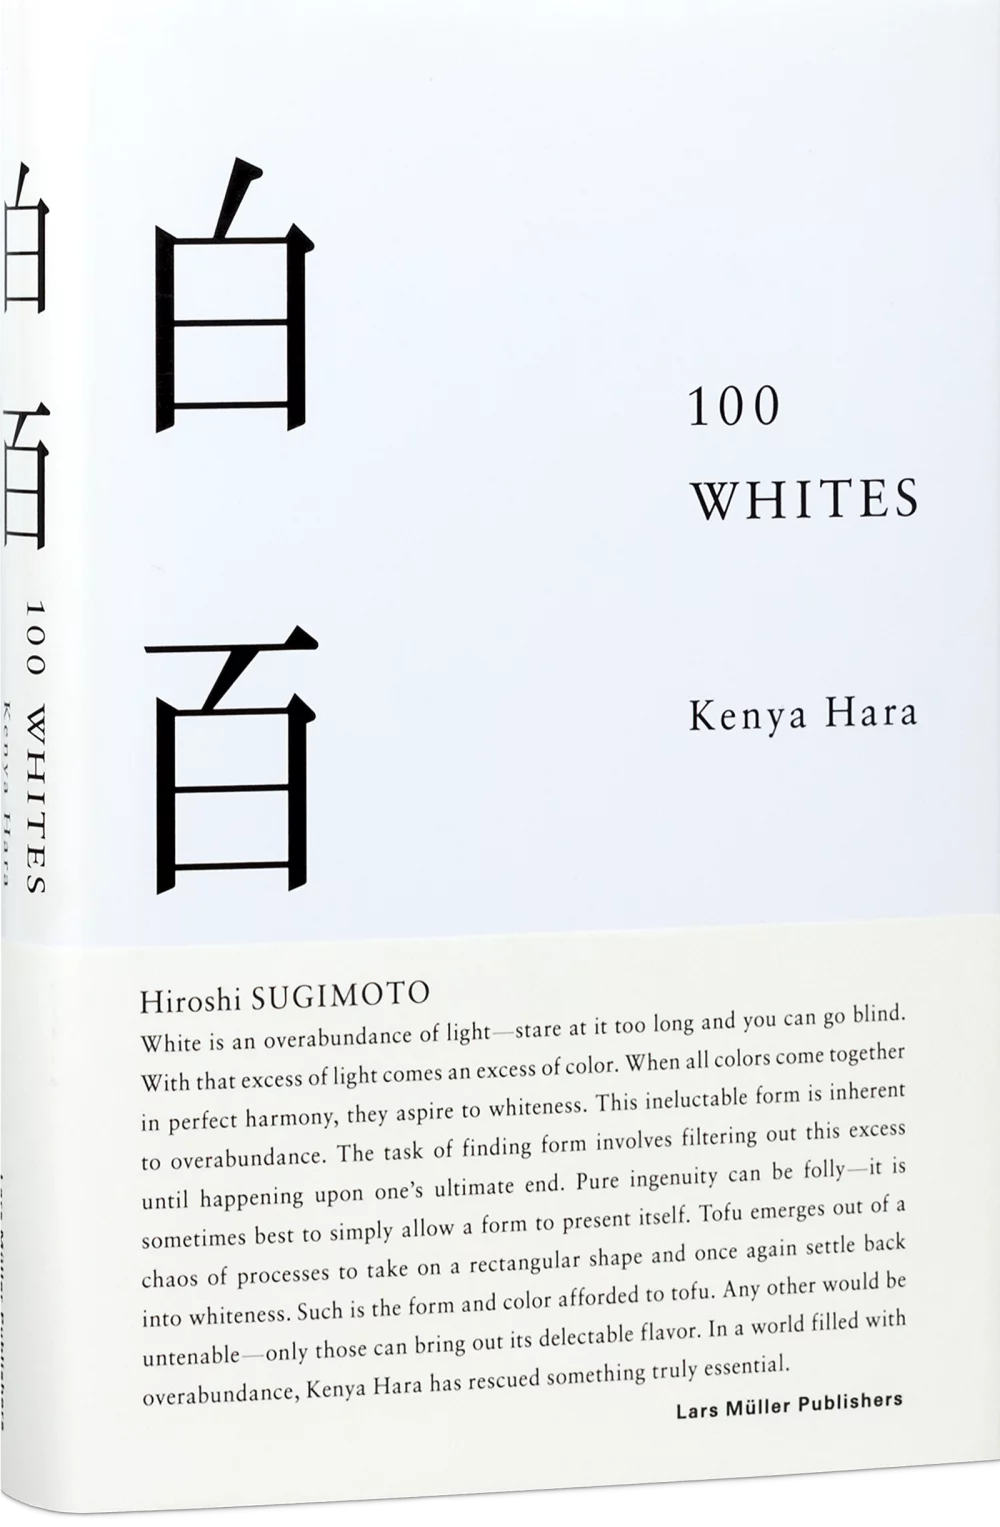 Kenya Hara - 100 Whites